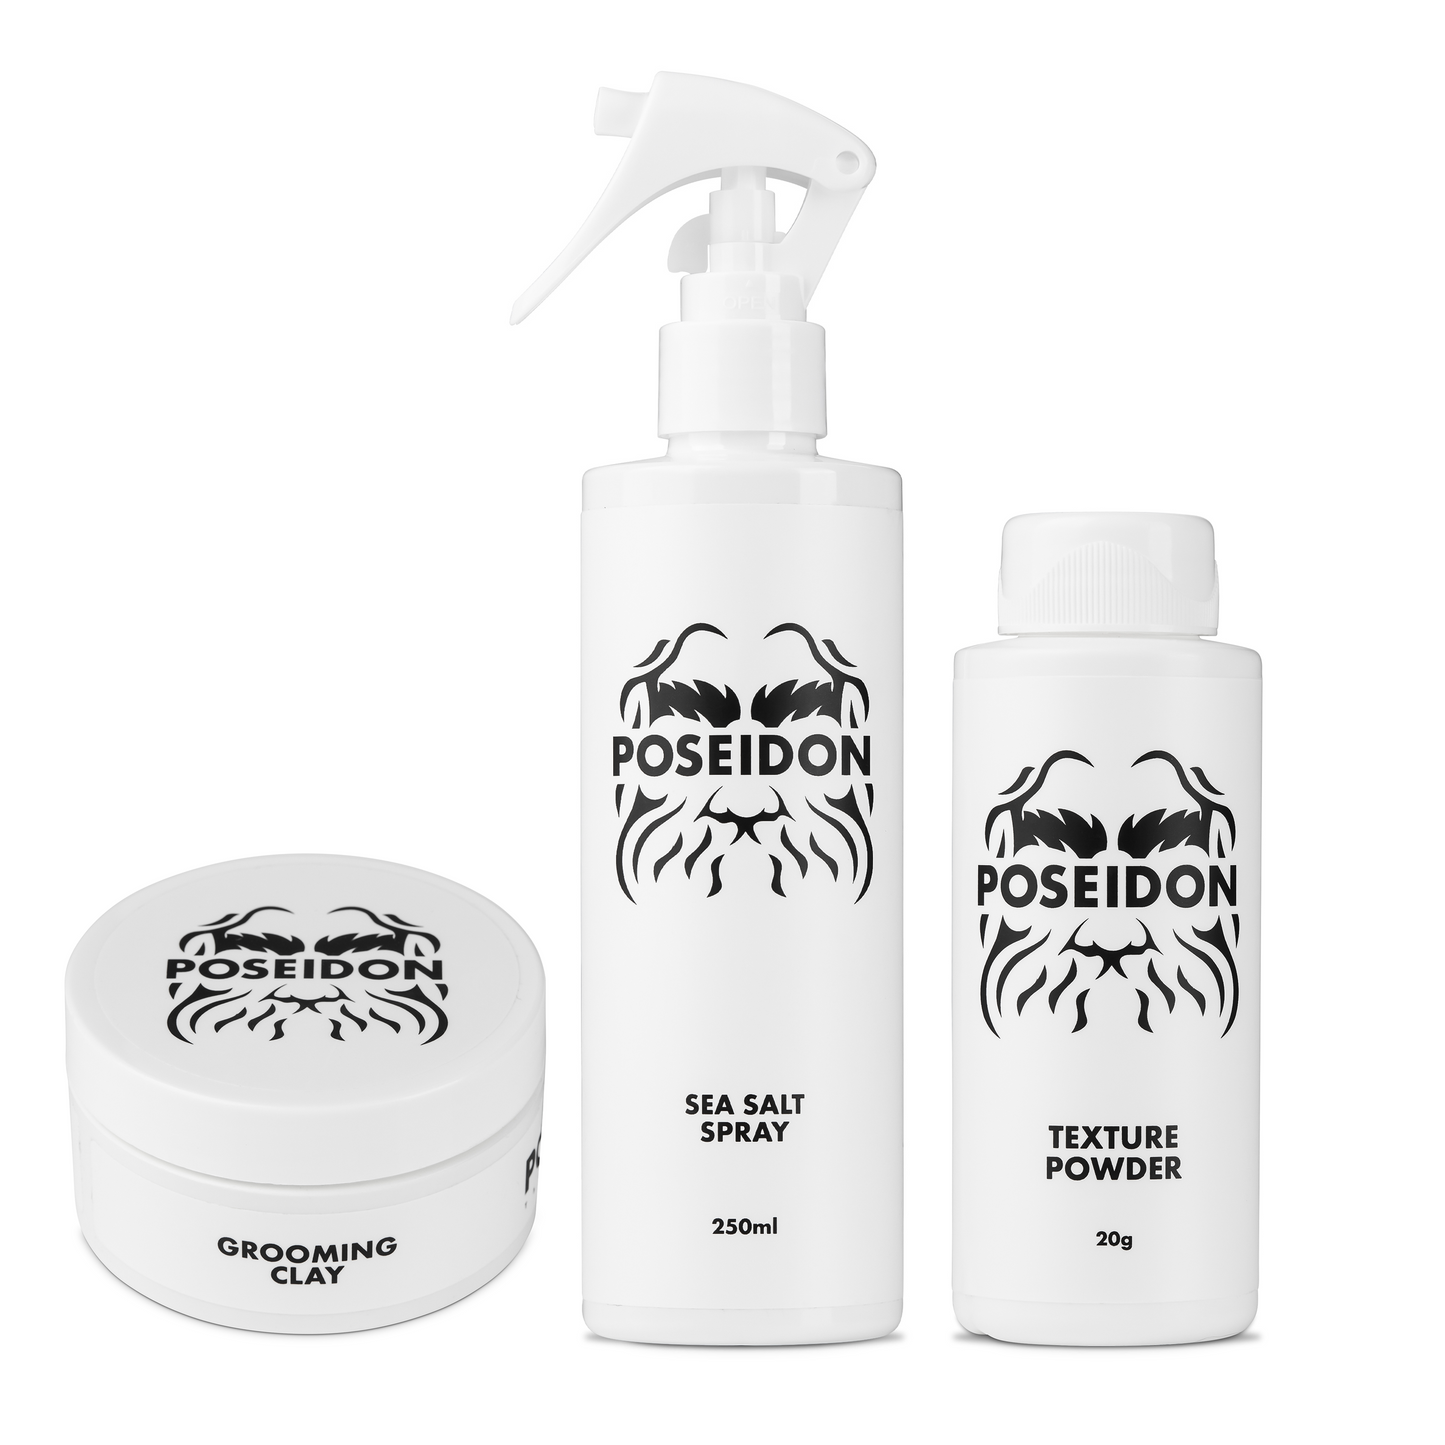 Poseidon Pack (Sea Salt Spray, Grooming Clay, Texture Powder): "Poseidon Pack - Perfect your style with the trio of Sea Salt Spray, Grooming Clay, and Texture Powder."